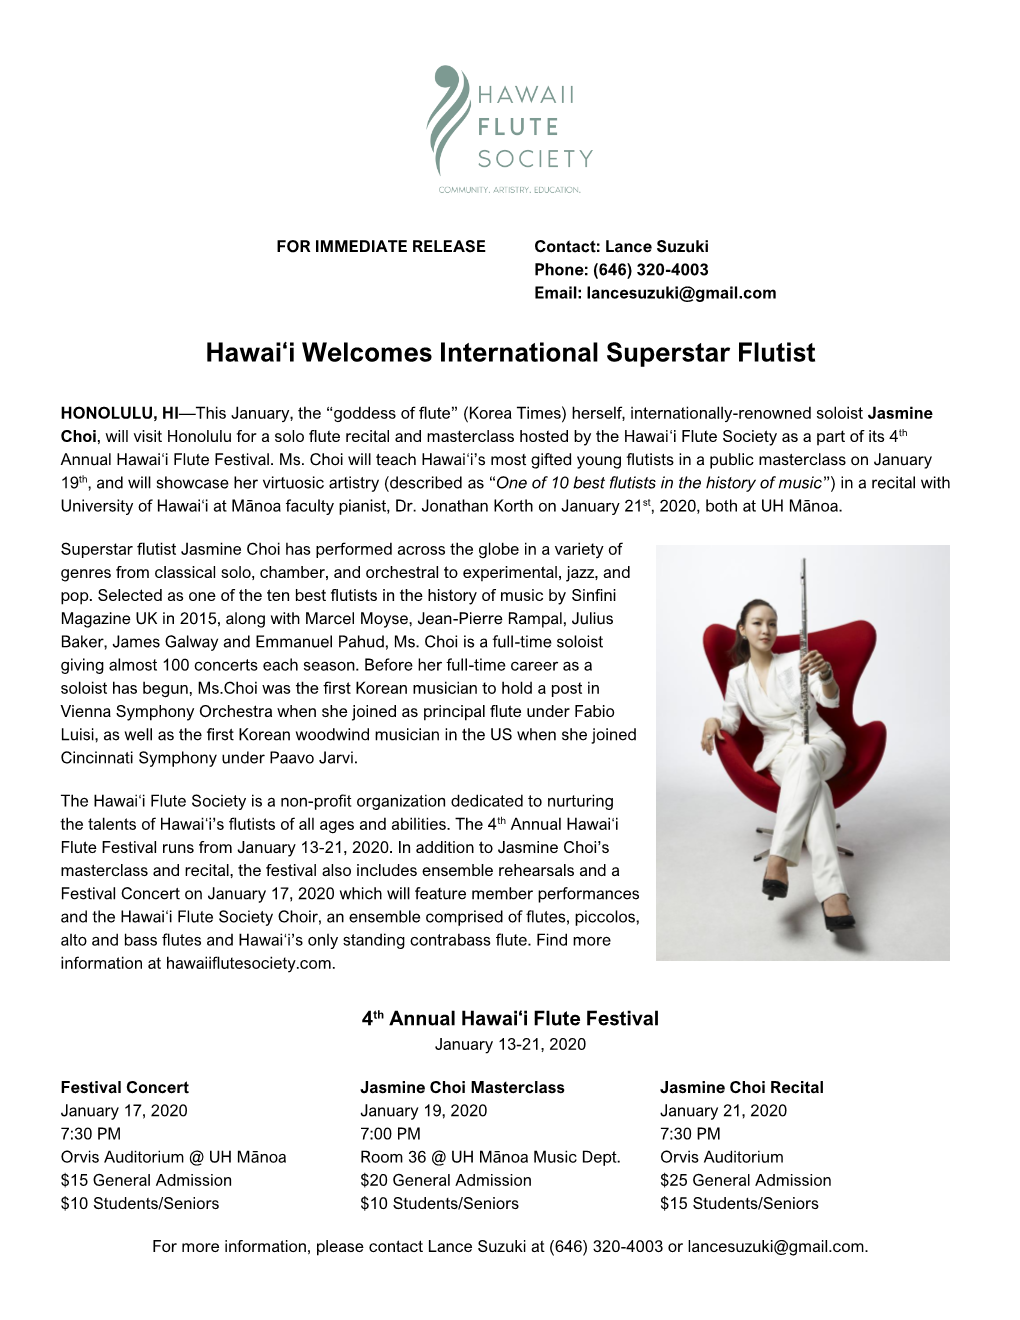 Hawaiʻi Welcomes International Superstar Flutist